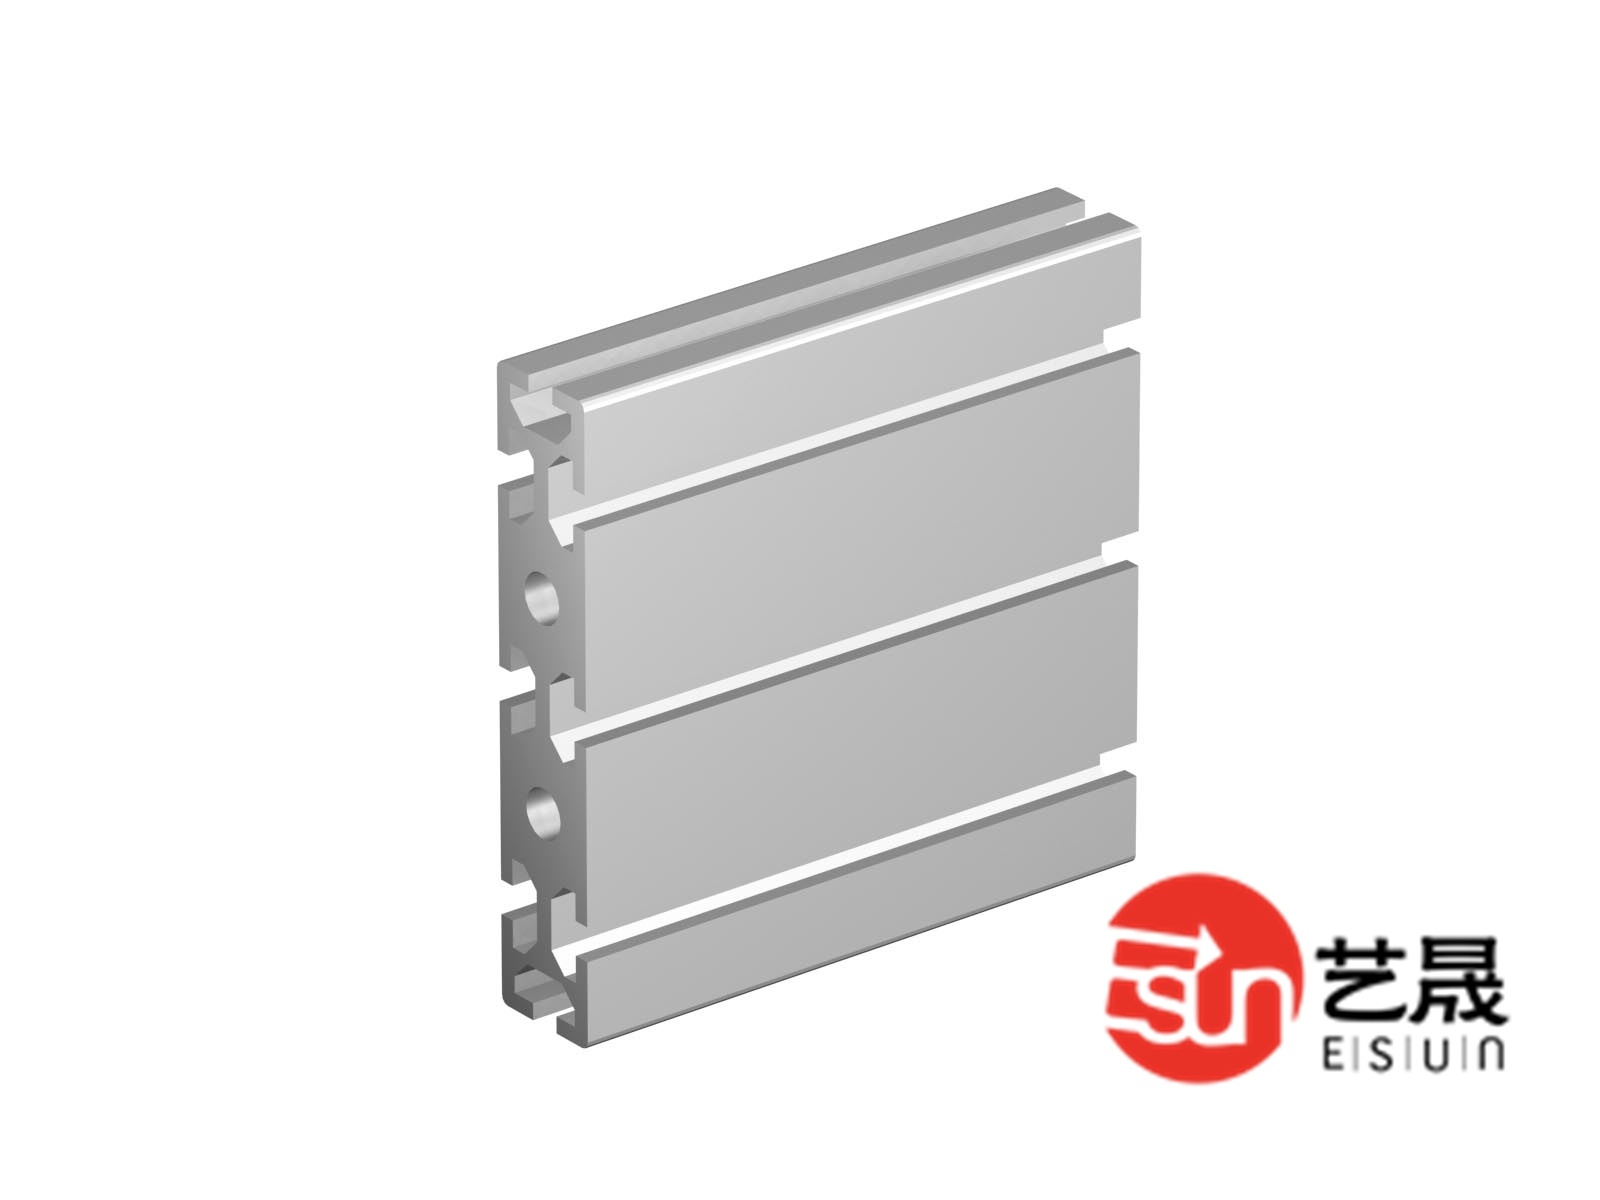 Al 6063 Anodize Black Aluminum Profile Extrusion Heat Sink (EP126)